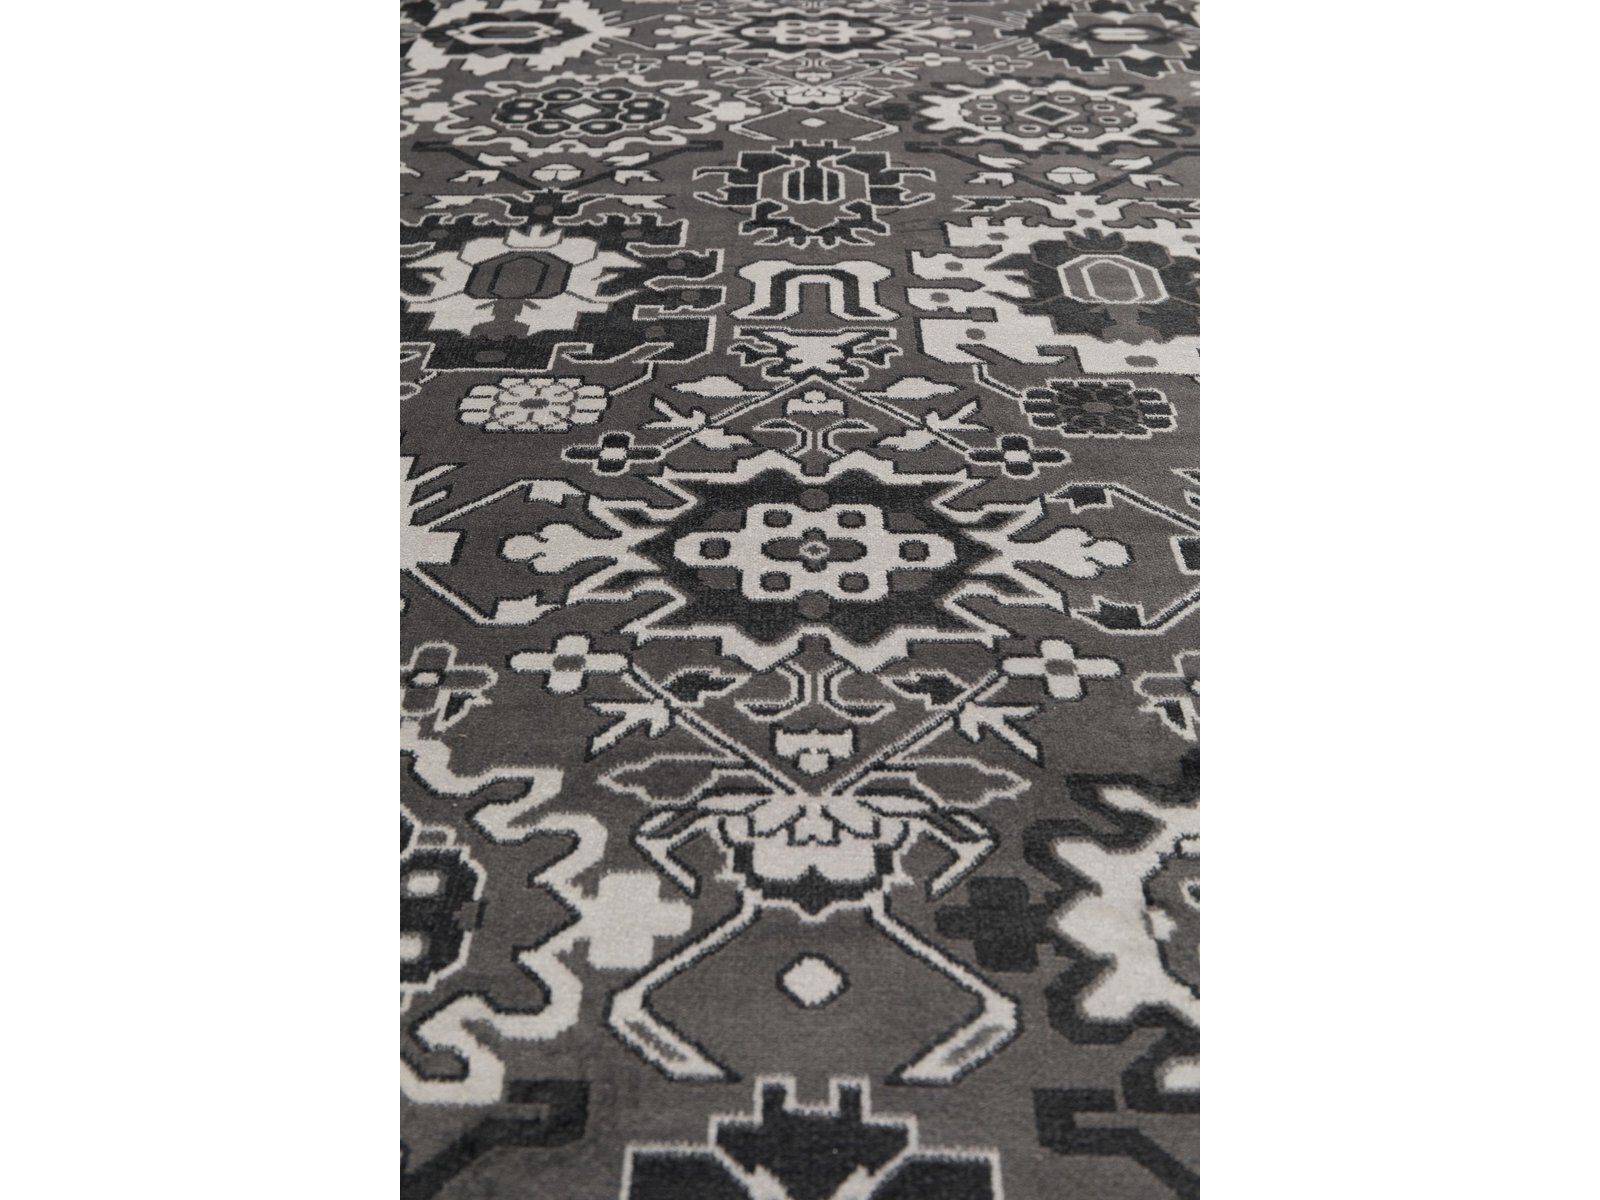 white-label-living-carpet-studio-170-x-240-cm